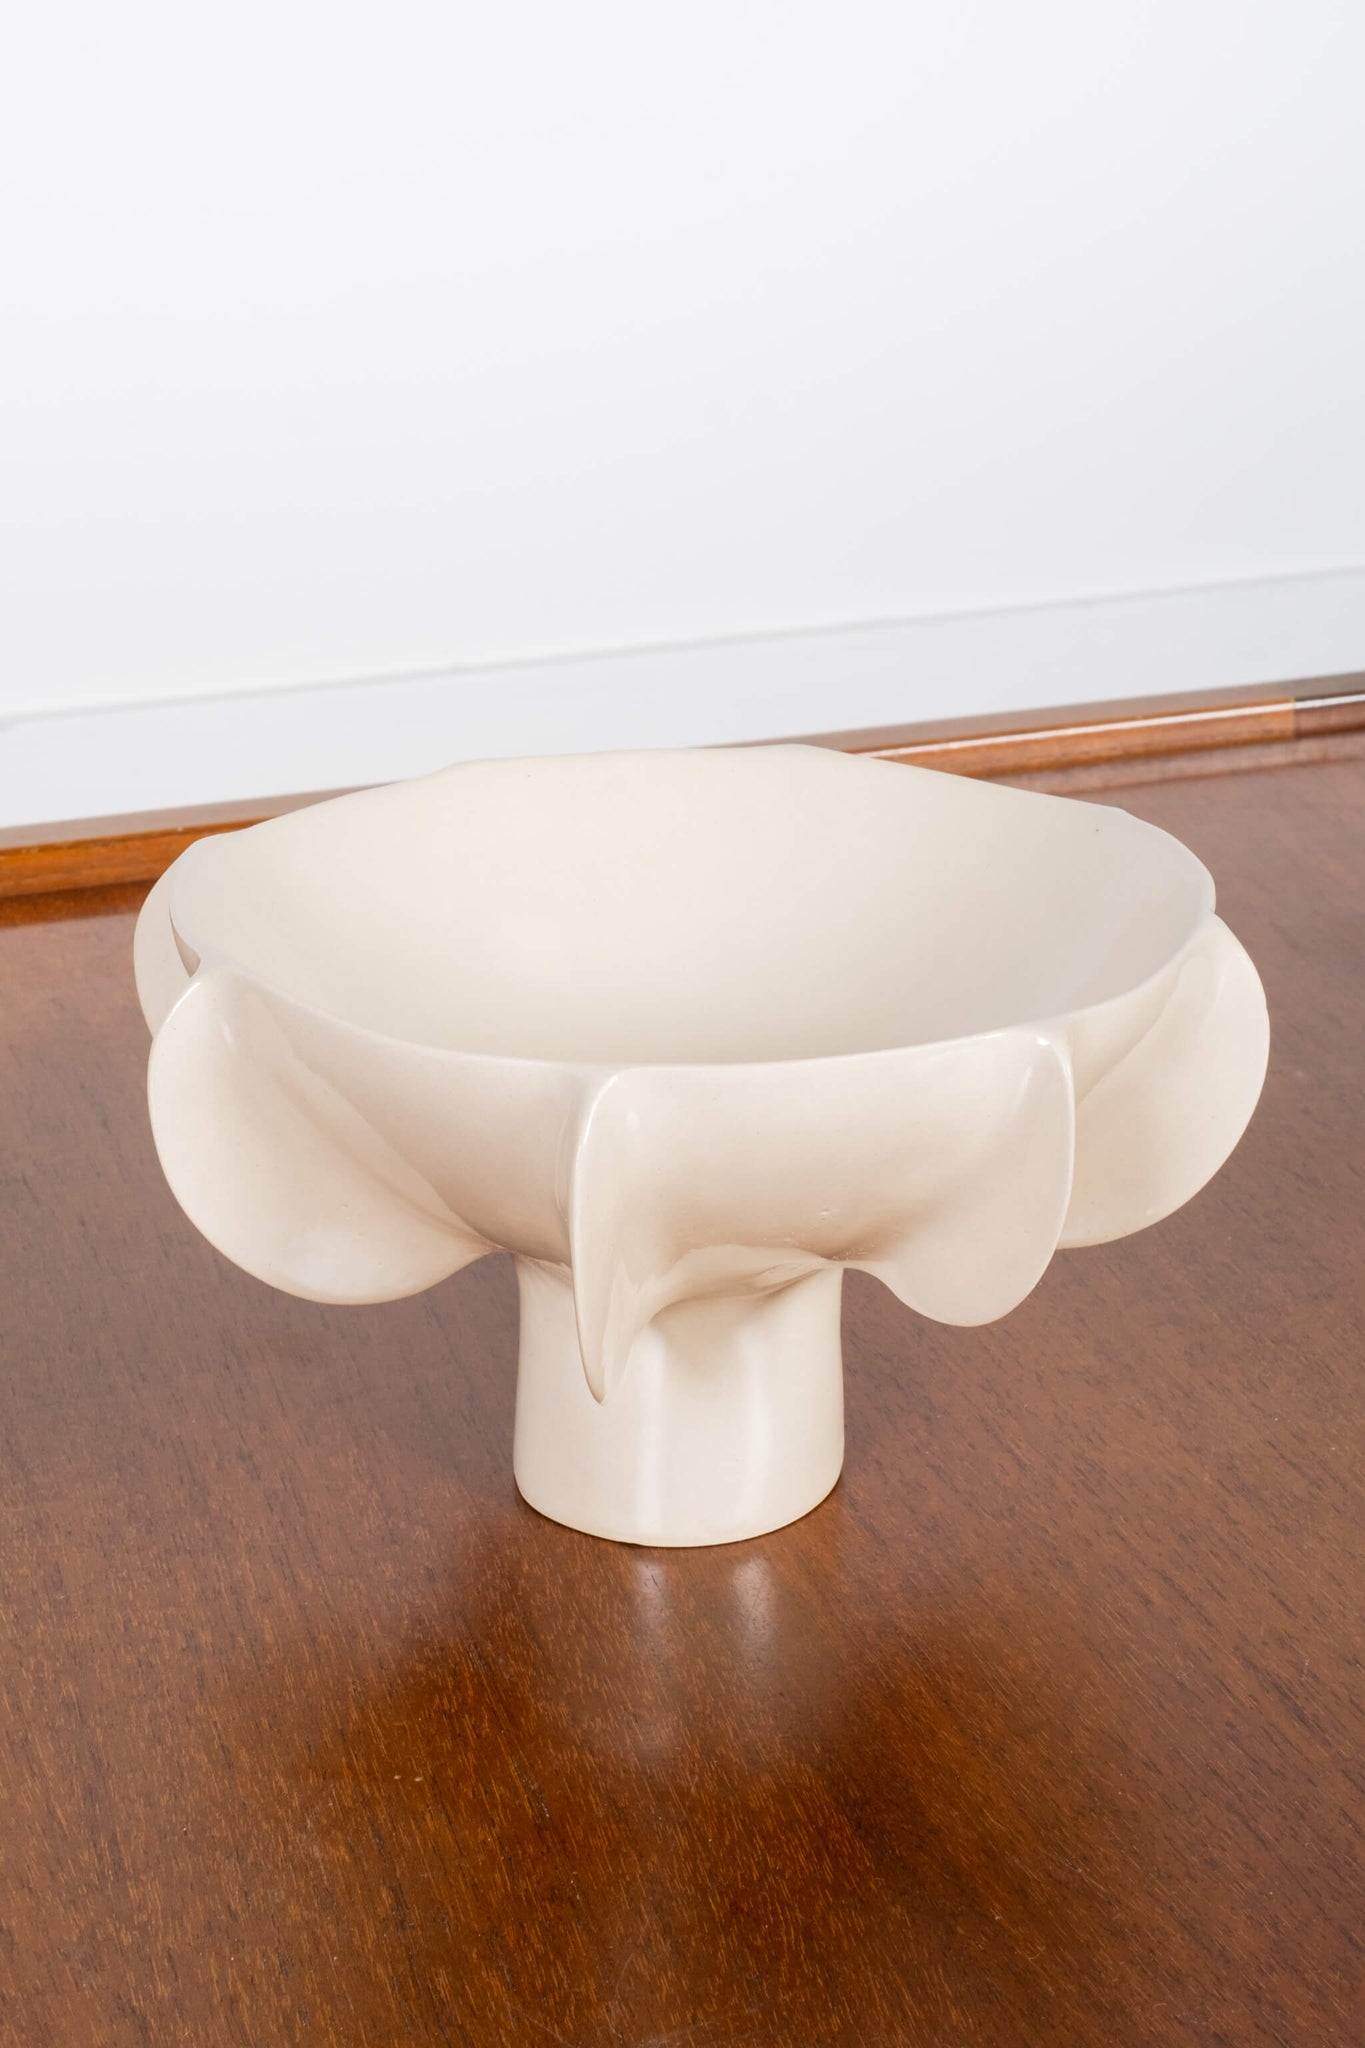 Urchin Vase Kogevina Ceramics, front angled view